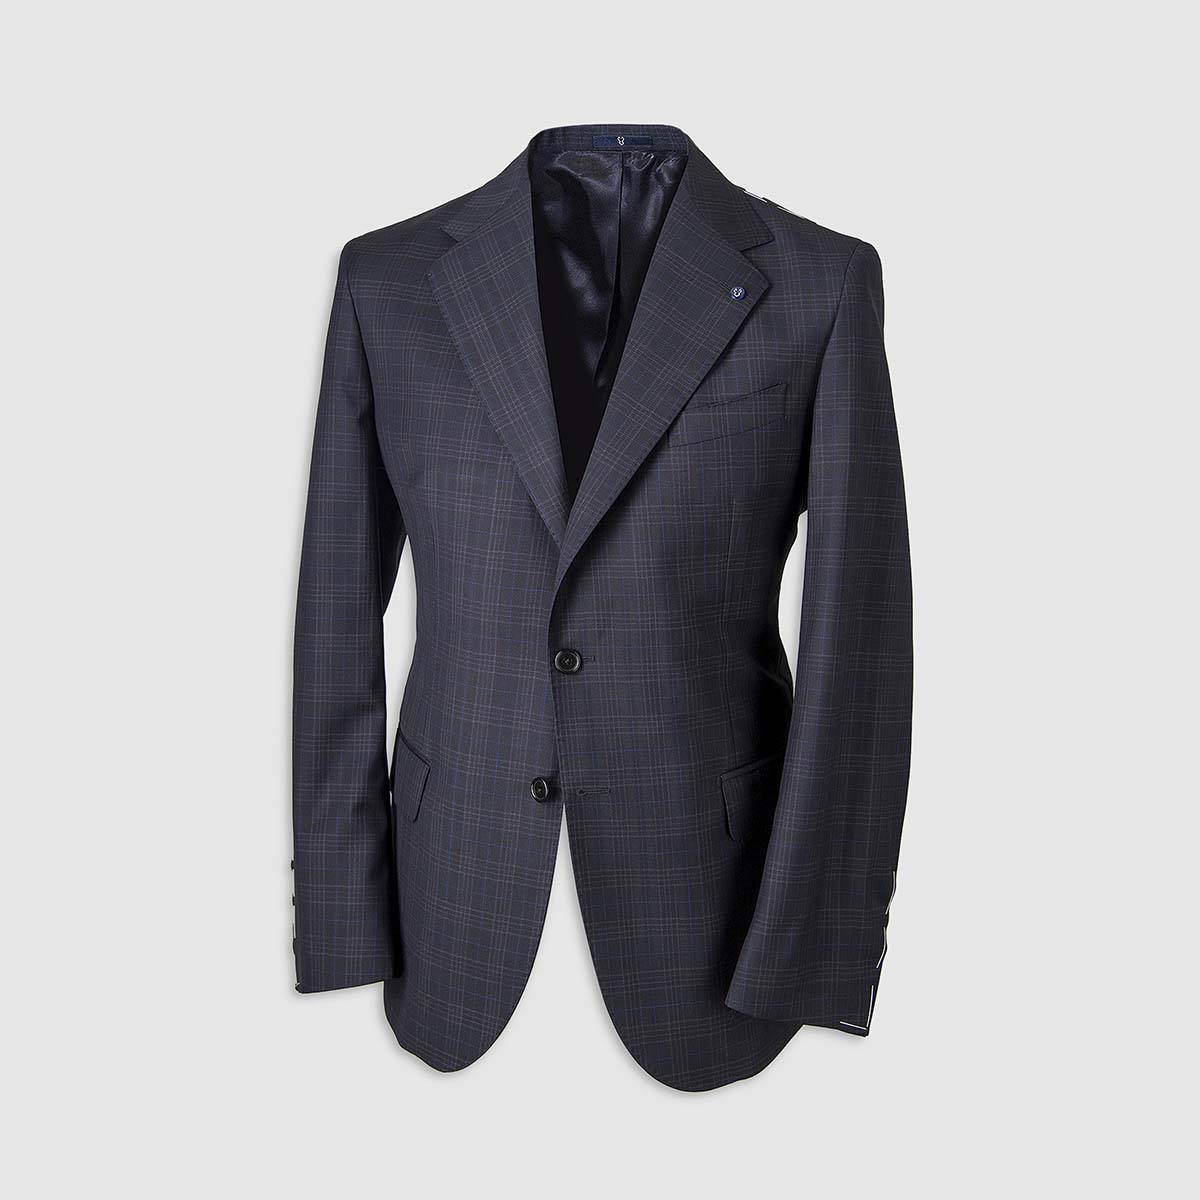 Grey Plaid Check Pattern Blazer in 130s Four Seasons Wool Melillo 1970 on sale 2022 2